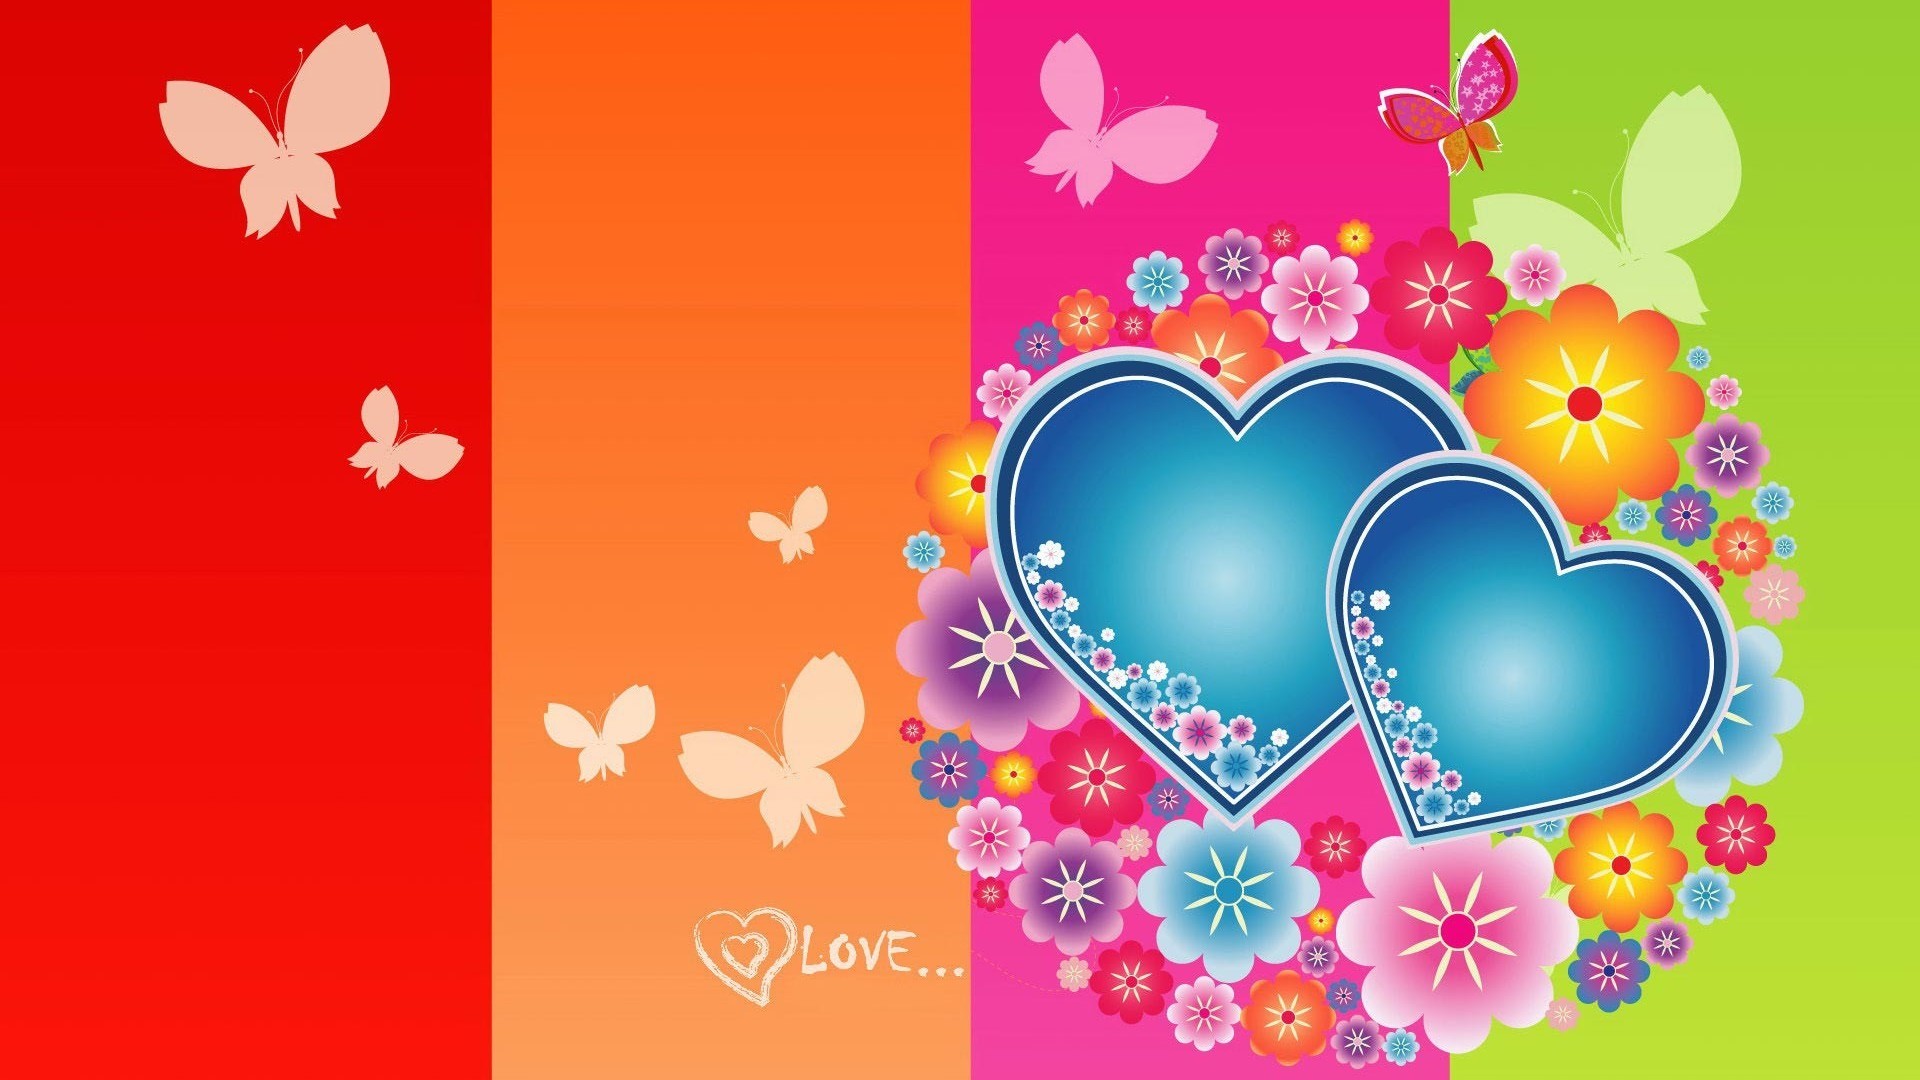 Cute valentines day hd desktop wallpaper Cute Wallpapers Desktop Pinterest Hd desktop and Wallpaper desktop